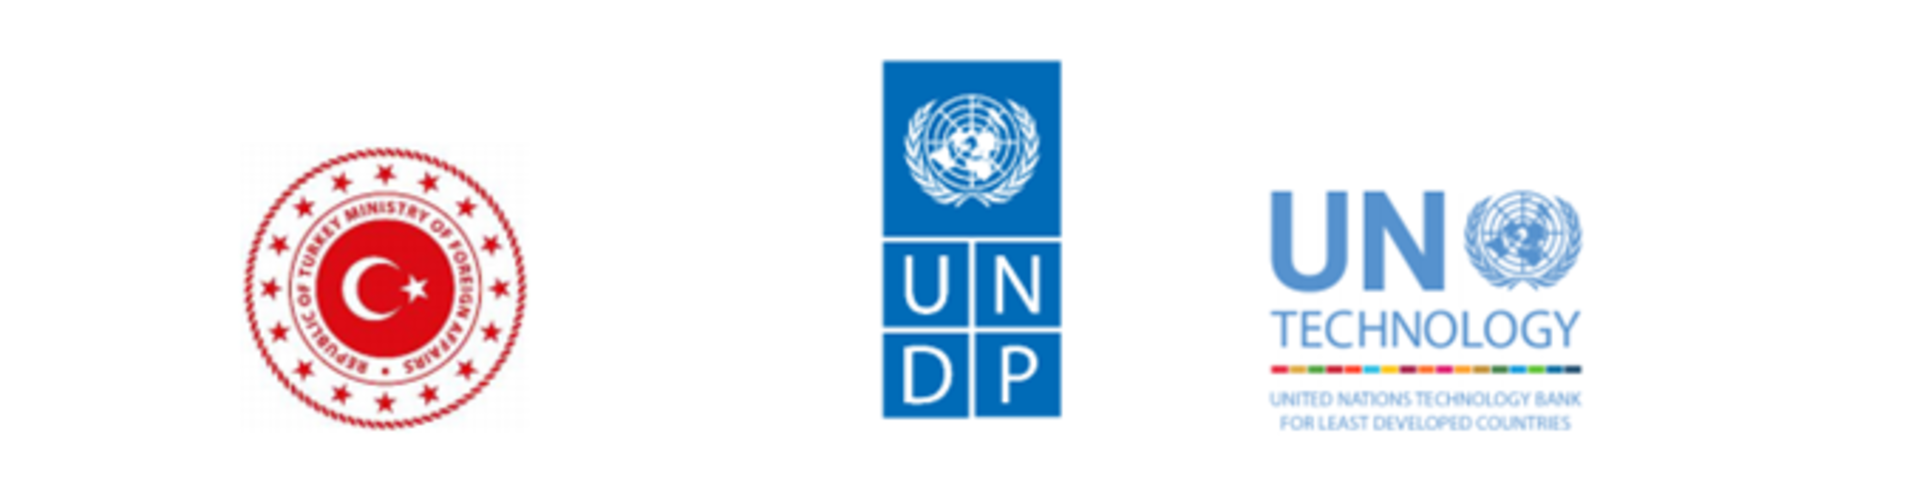 EMPRENDIMIENTOS. 2a. Convocatoria global para startups emitida por SDGia (aceleradora Ministerio de Asuntos Exteriores de Turquía + Programa de Desarrollo de la ONU)